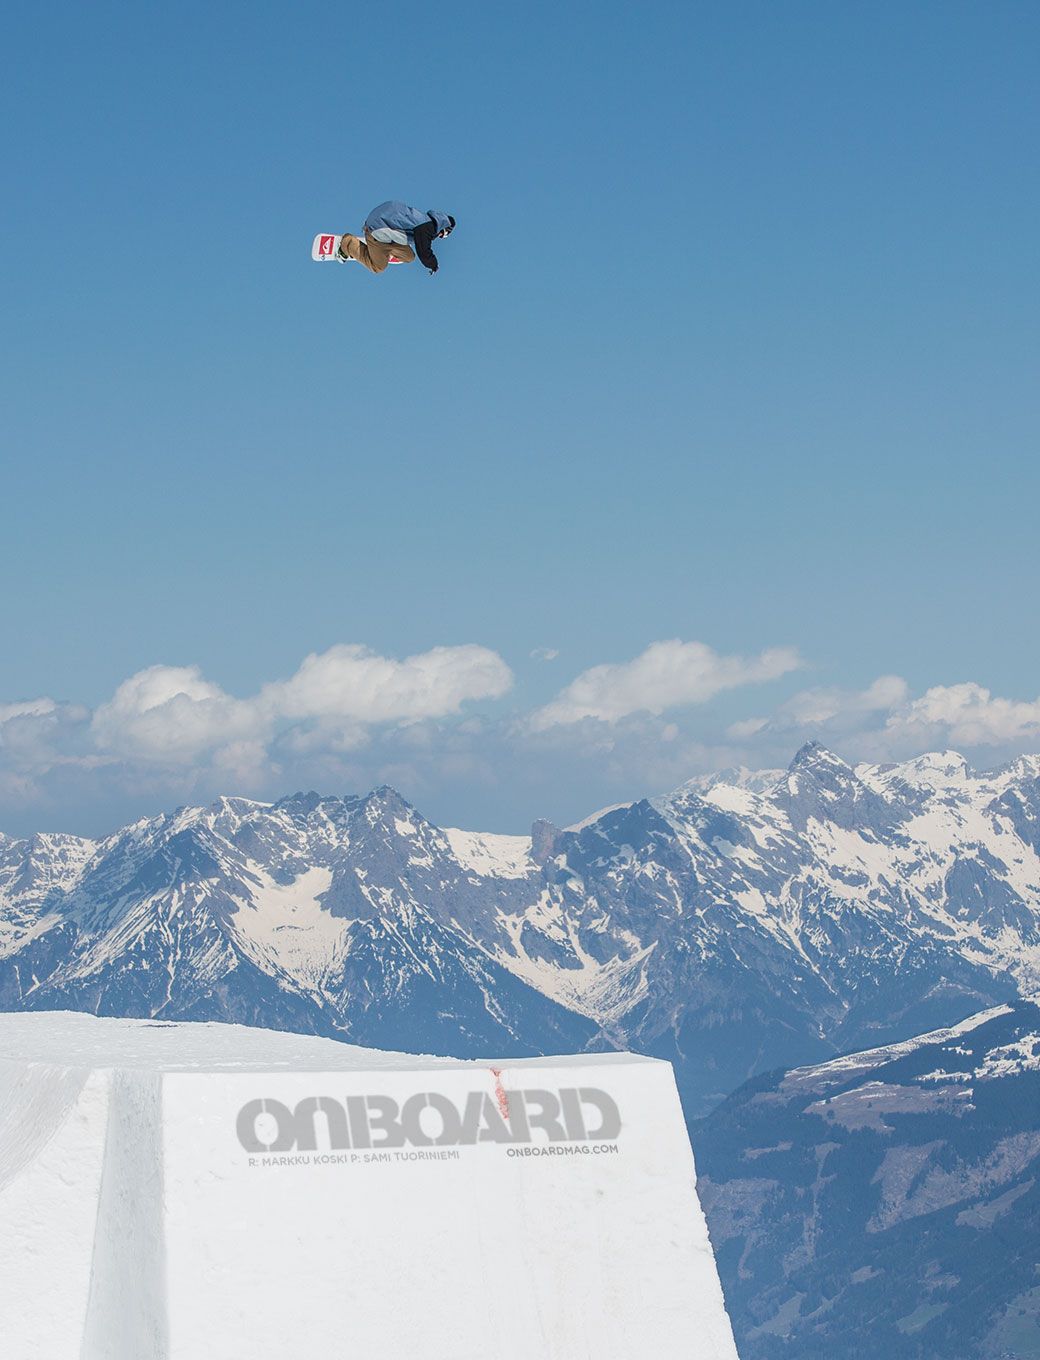 Markku Koski Backside Air 19 Sick Snowboard Wallpapers For Your